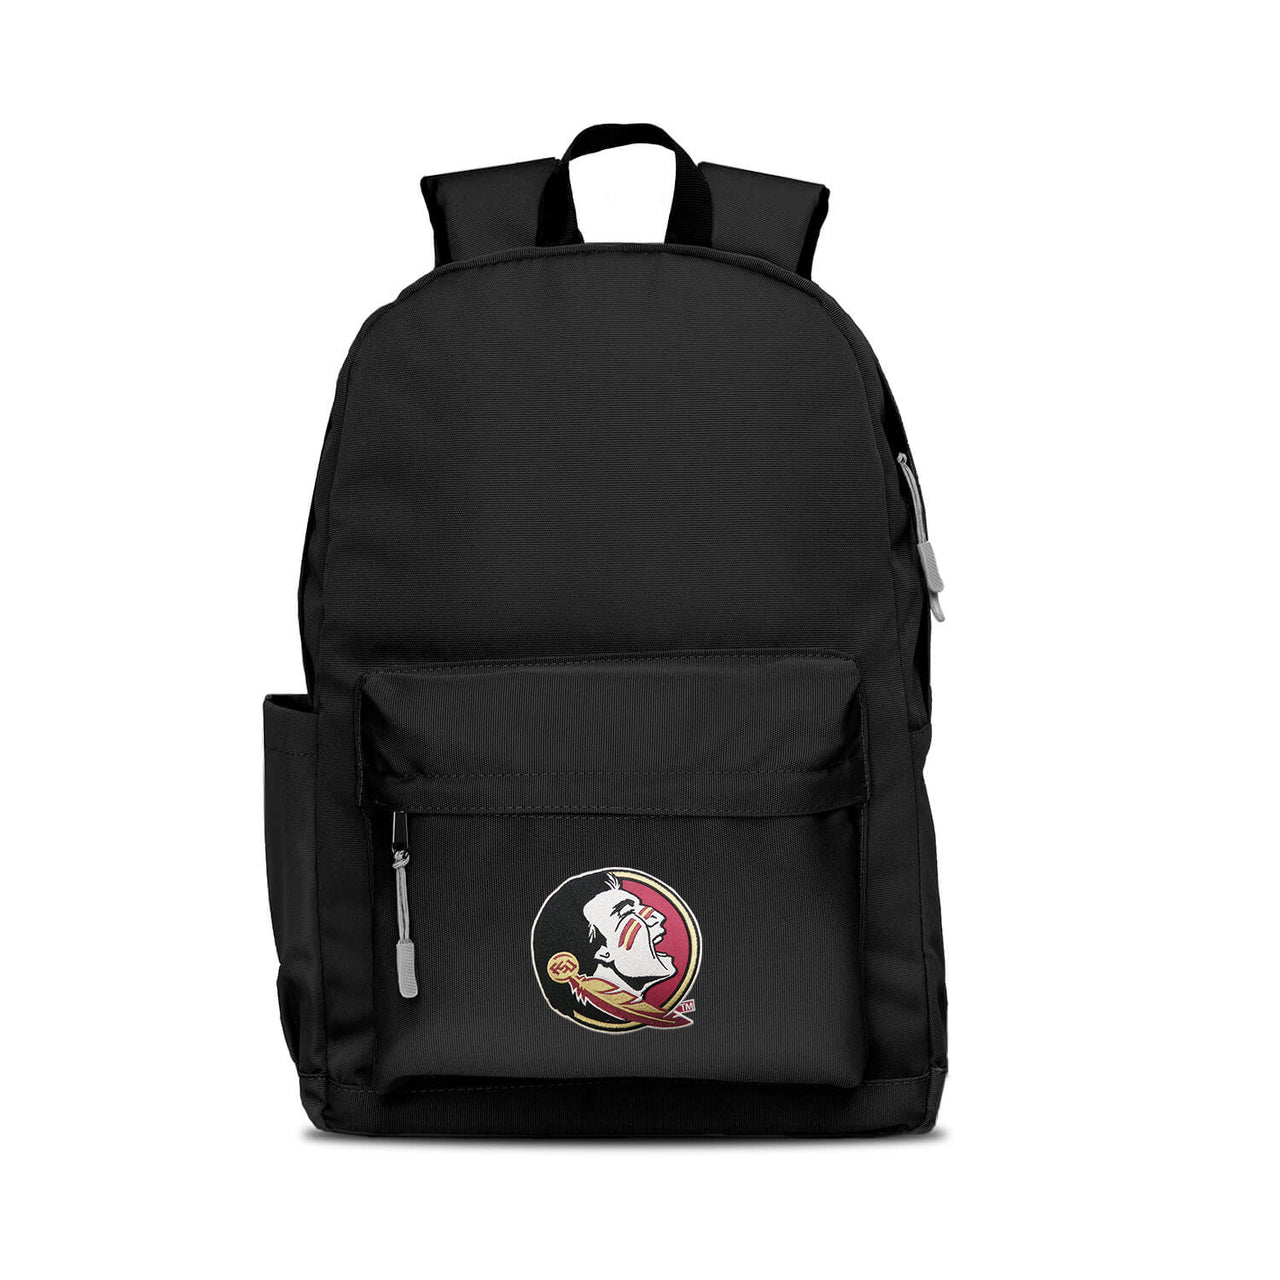 Florida State Seminoles Campus Laptop Backpack- Black